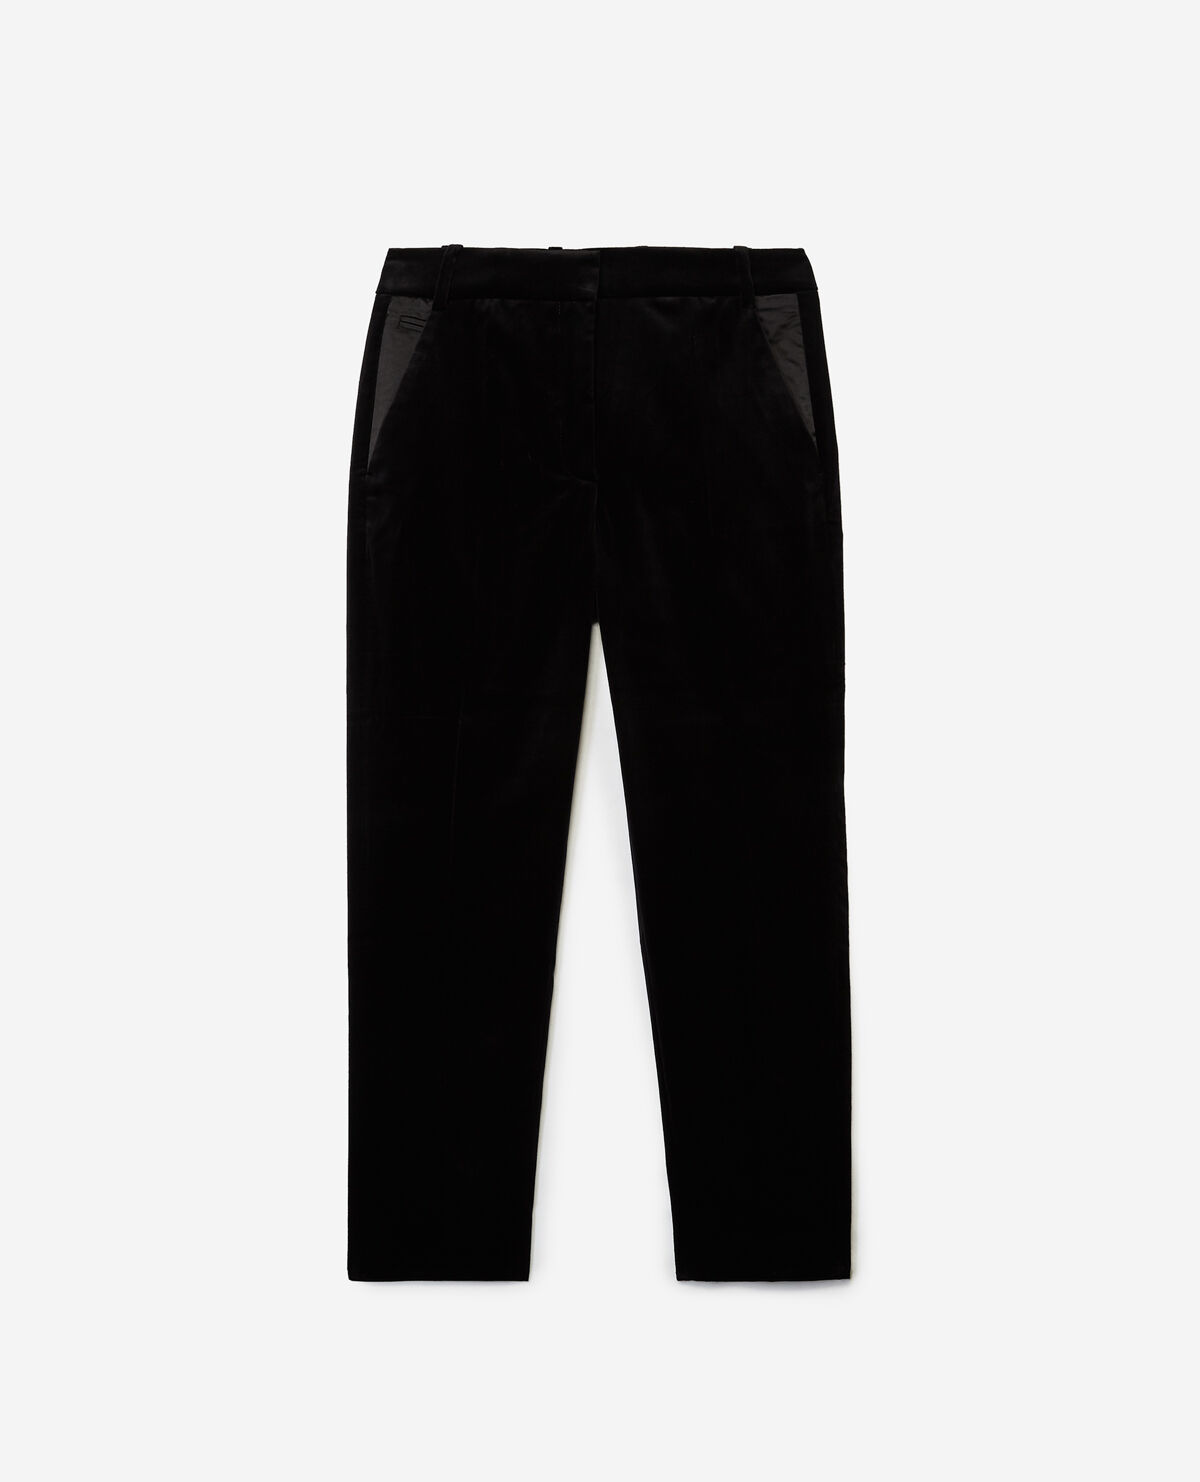 ASOS DESIGN skinny suit pants in black velvet and sequins | ASOS